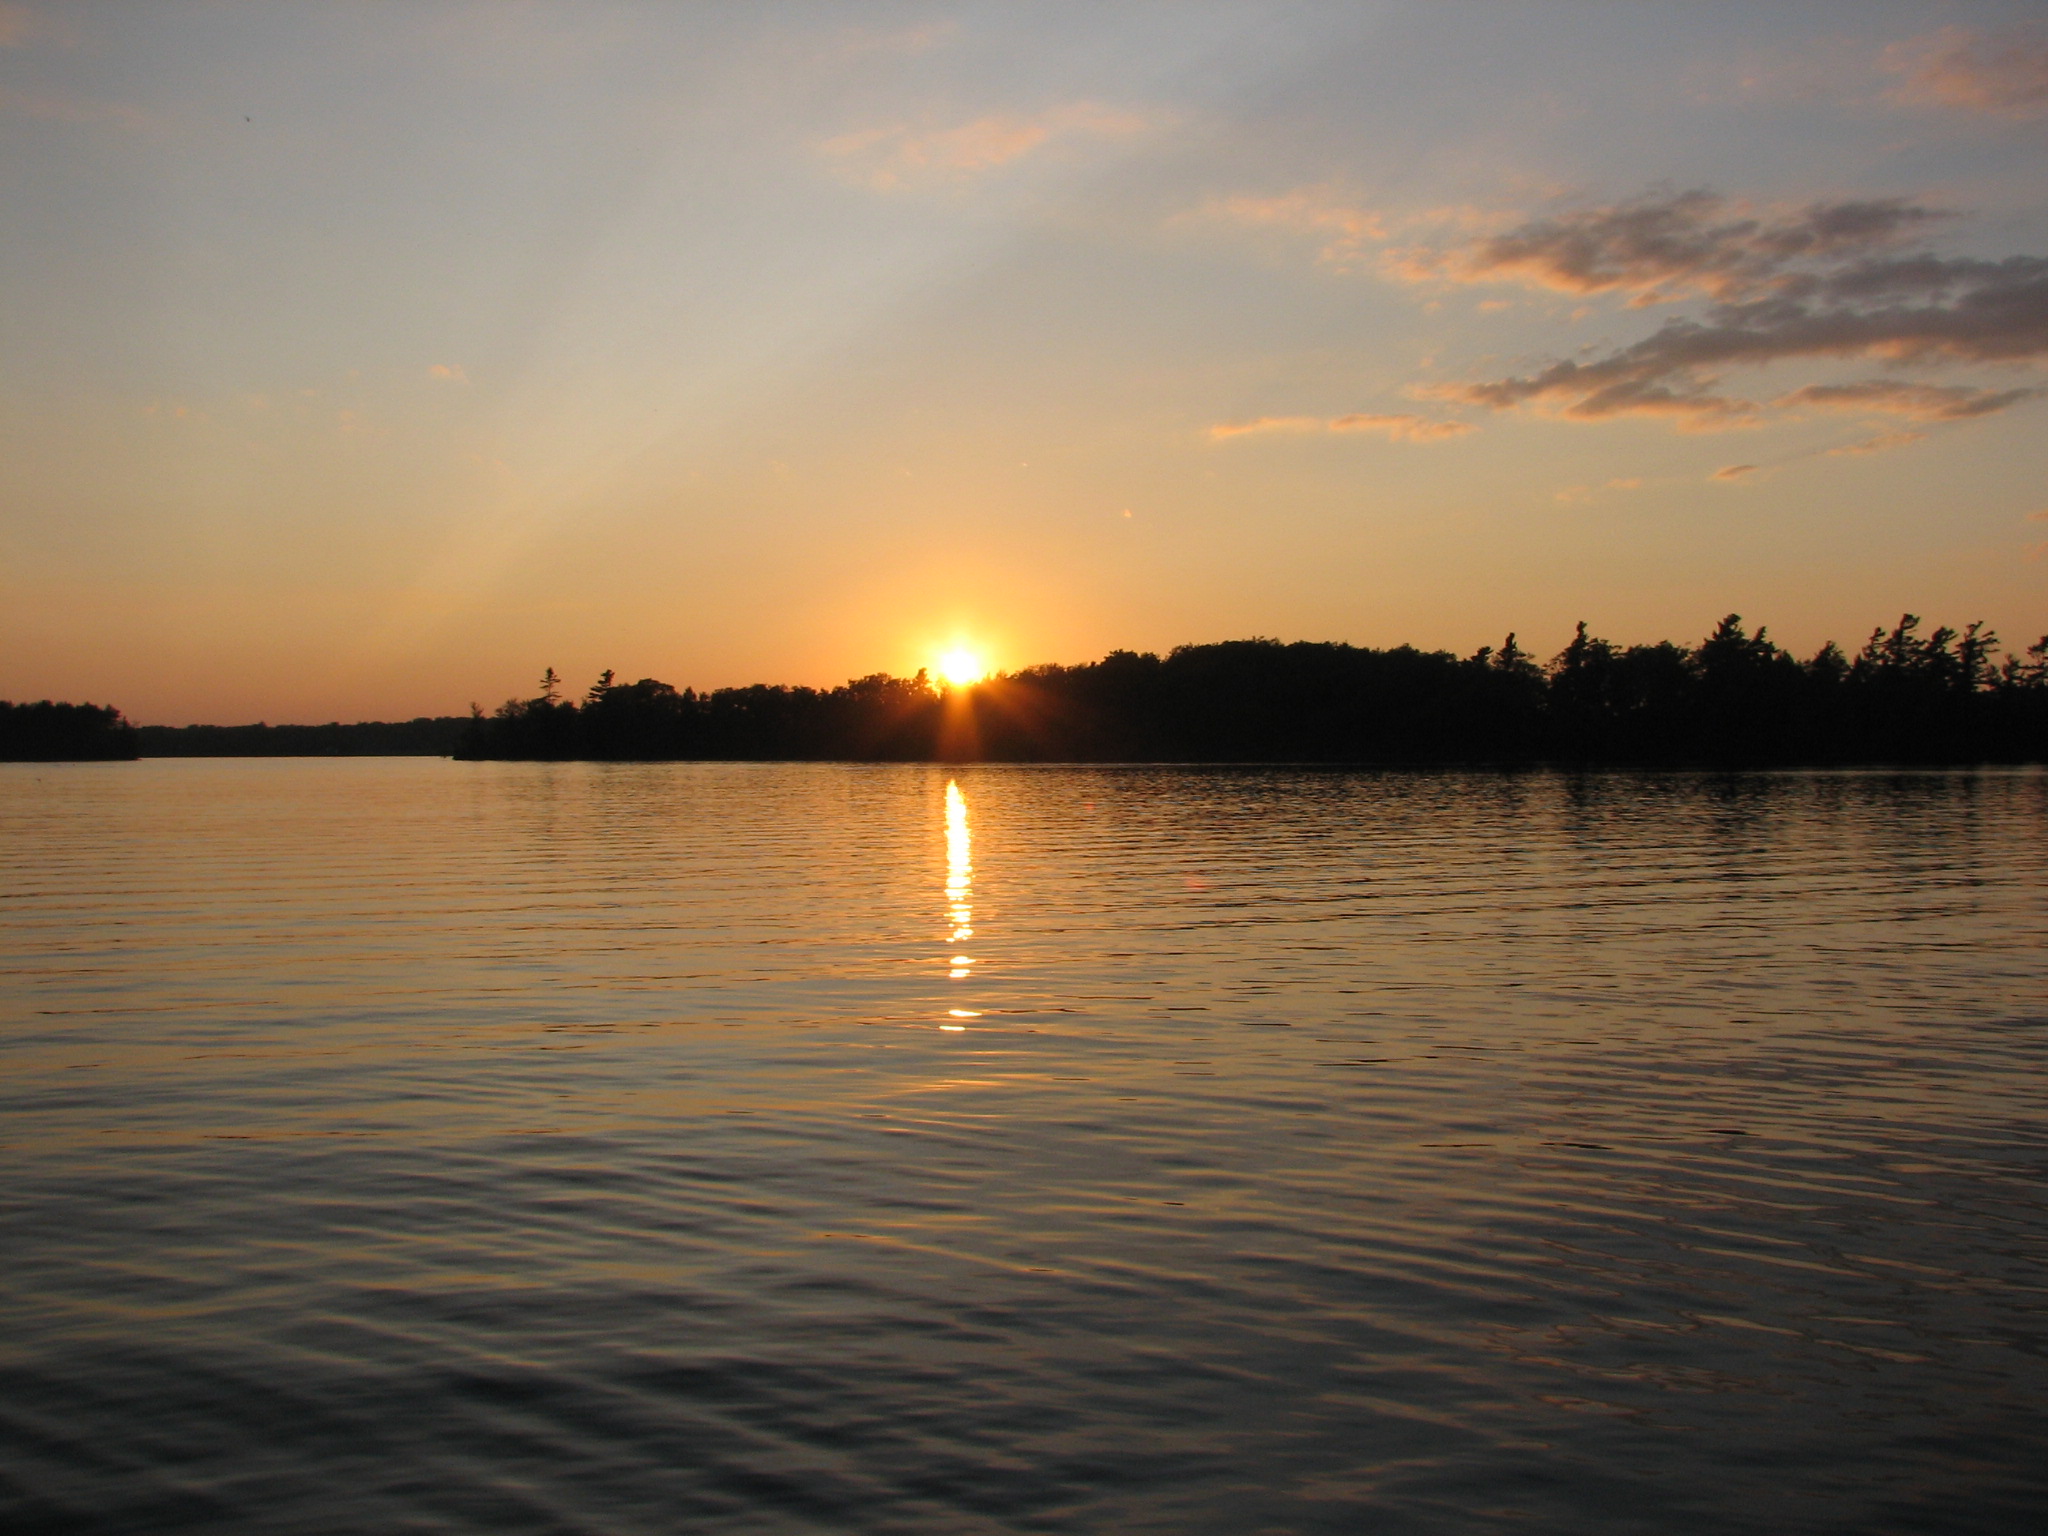 Sunset on the Lake | Colline's Blog